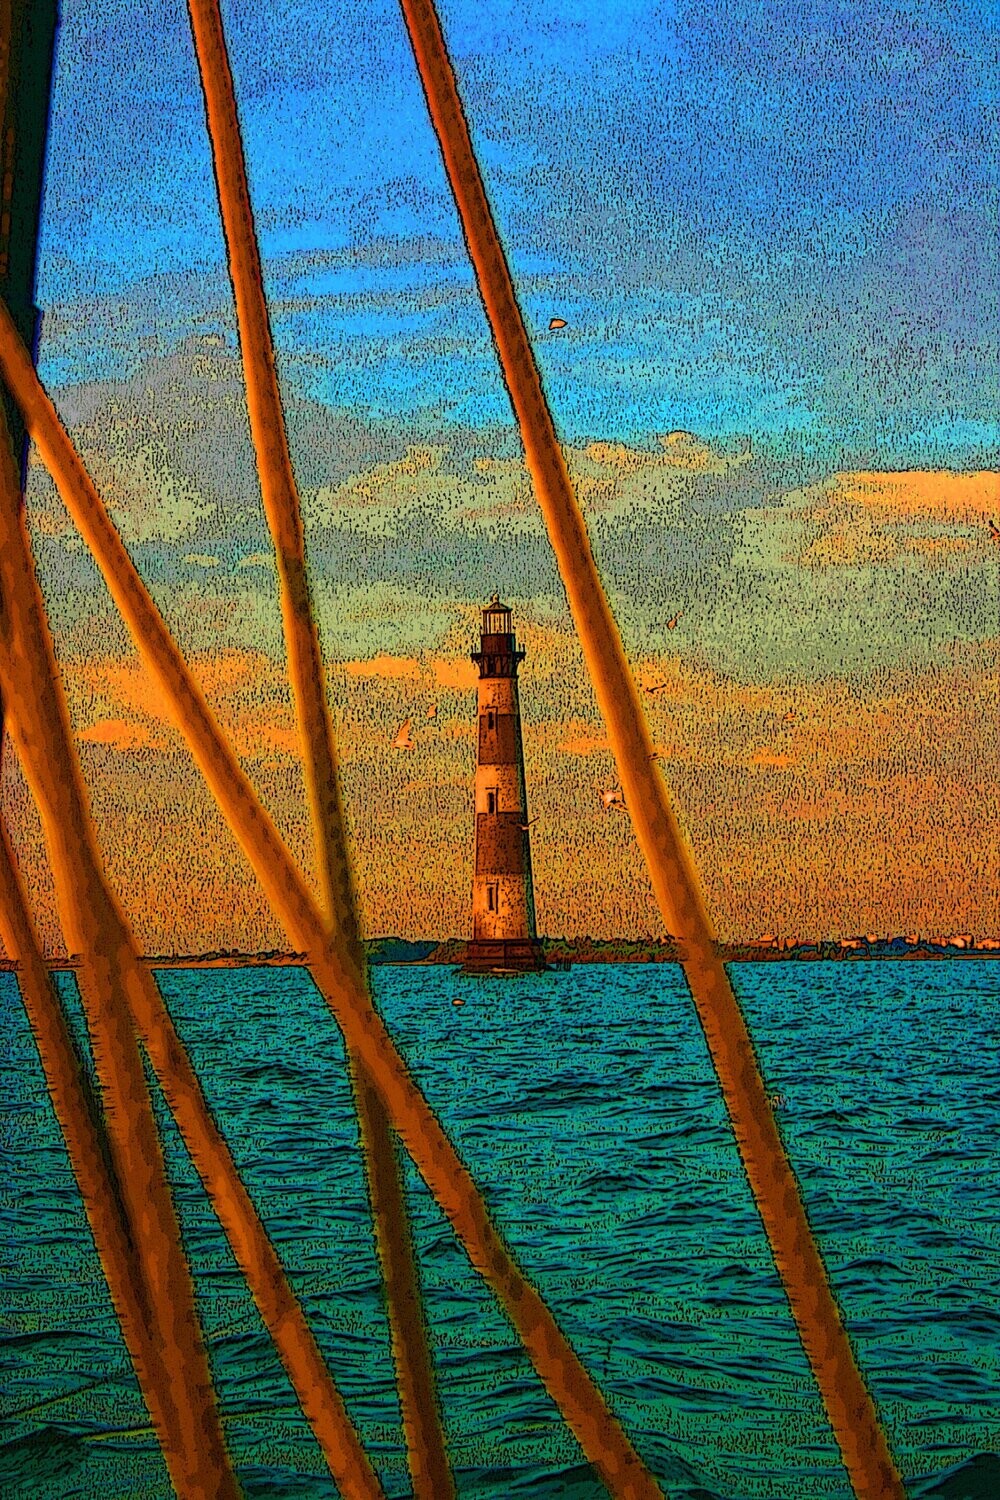 "Morris Island Lighthouse" by MFox